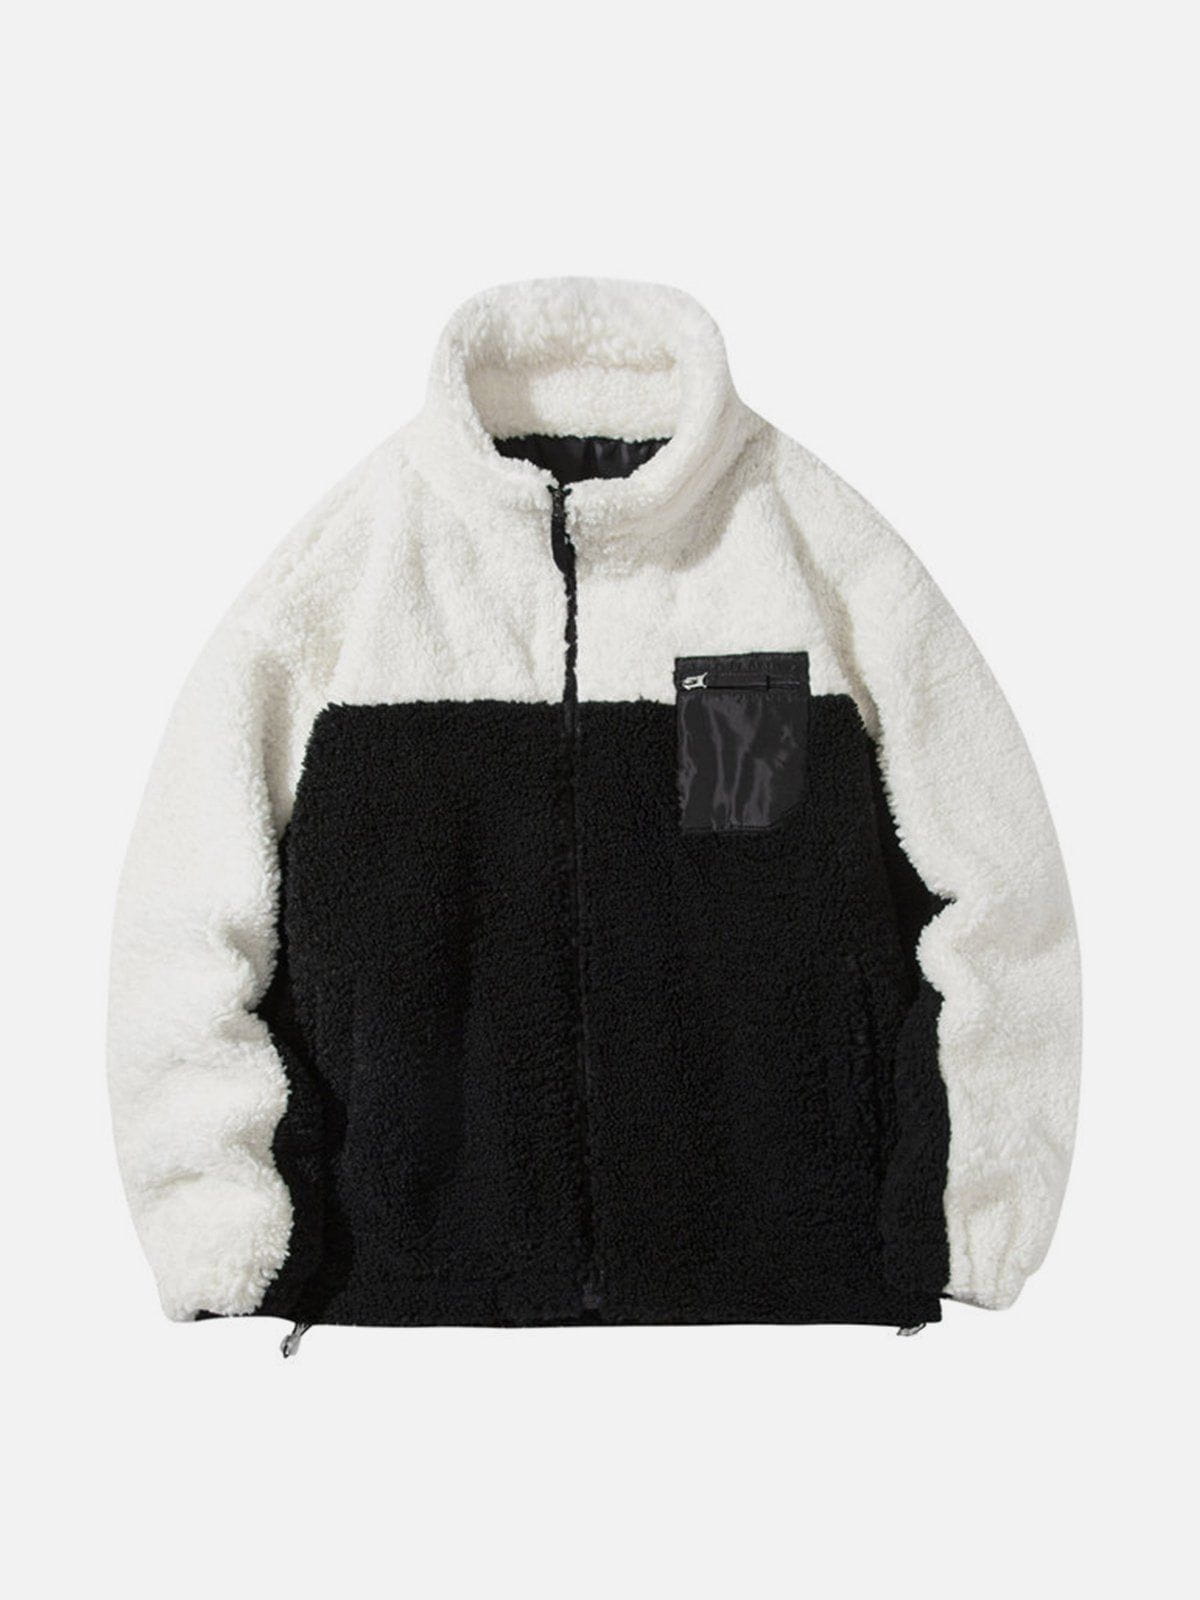 Sneakerland™ - Splicing Sherpa Winter Coat